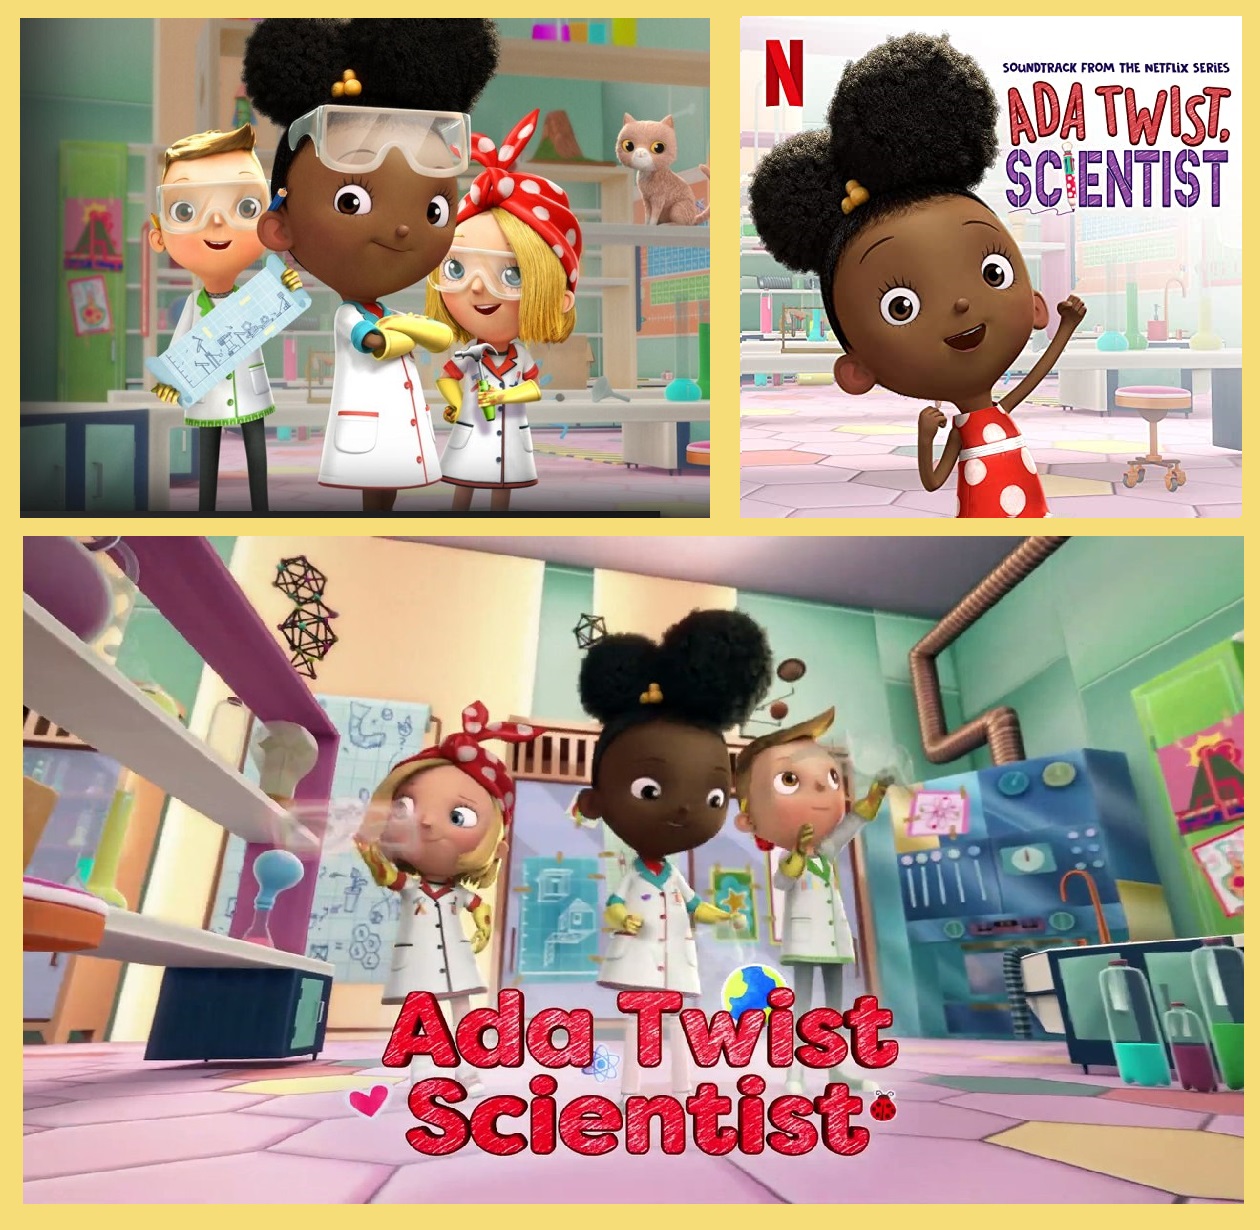 Ada Twist, la scientifique